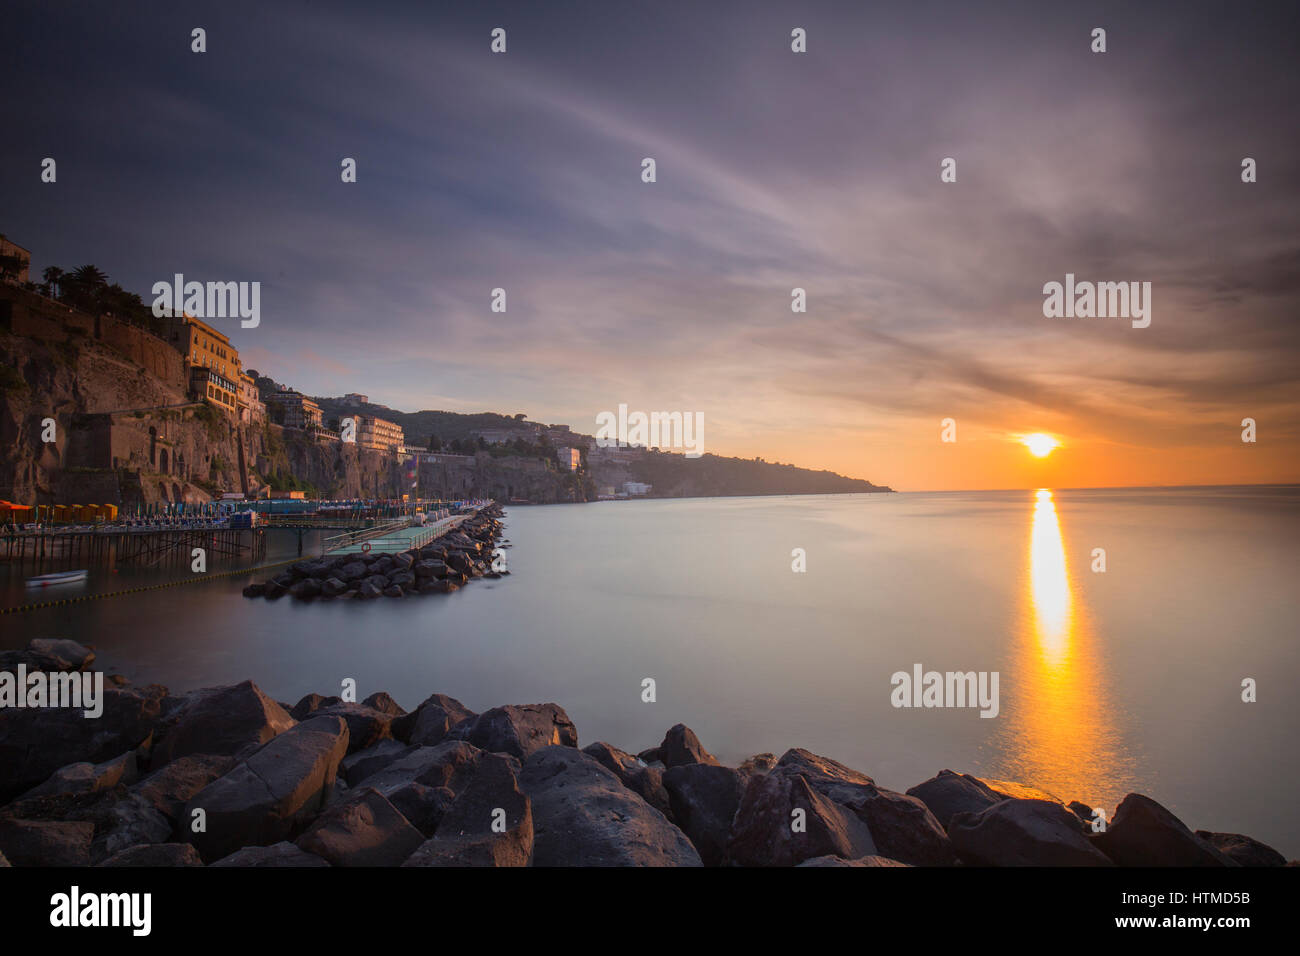 Marameo Beach in Sorrento, Italy during sunset Stock Photo